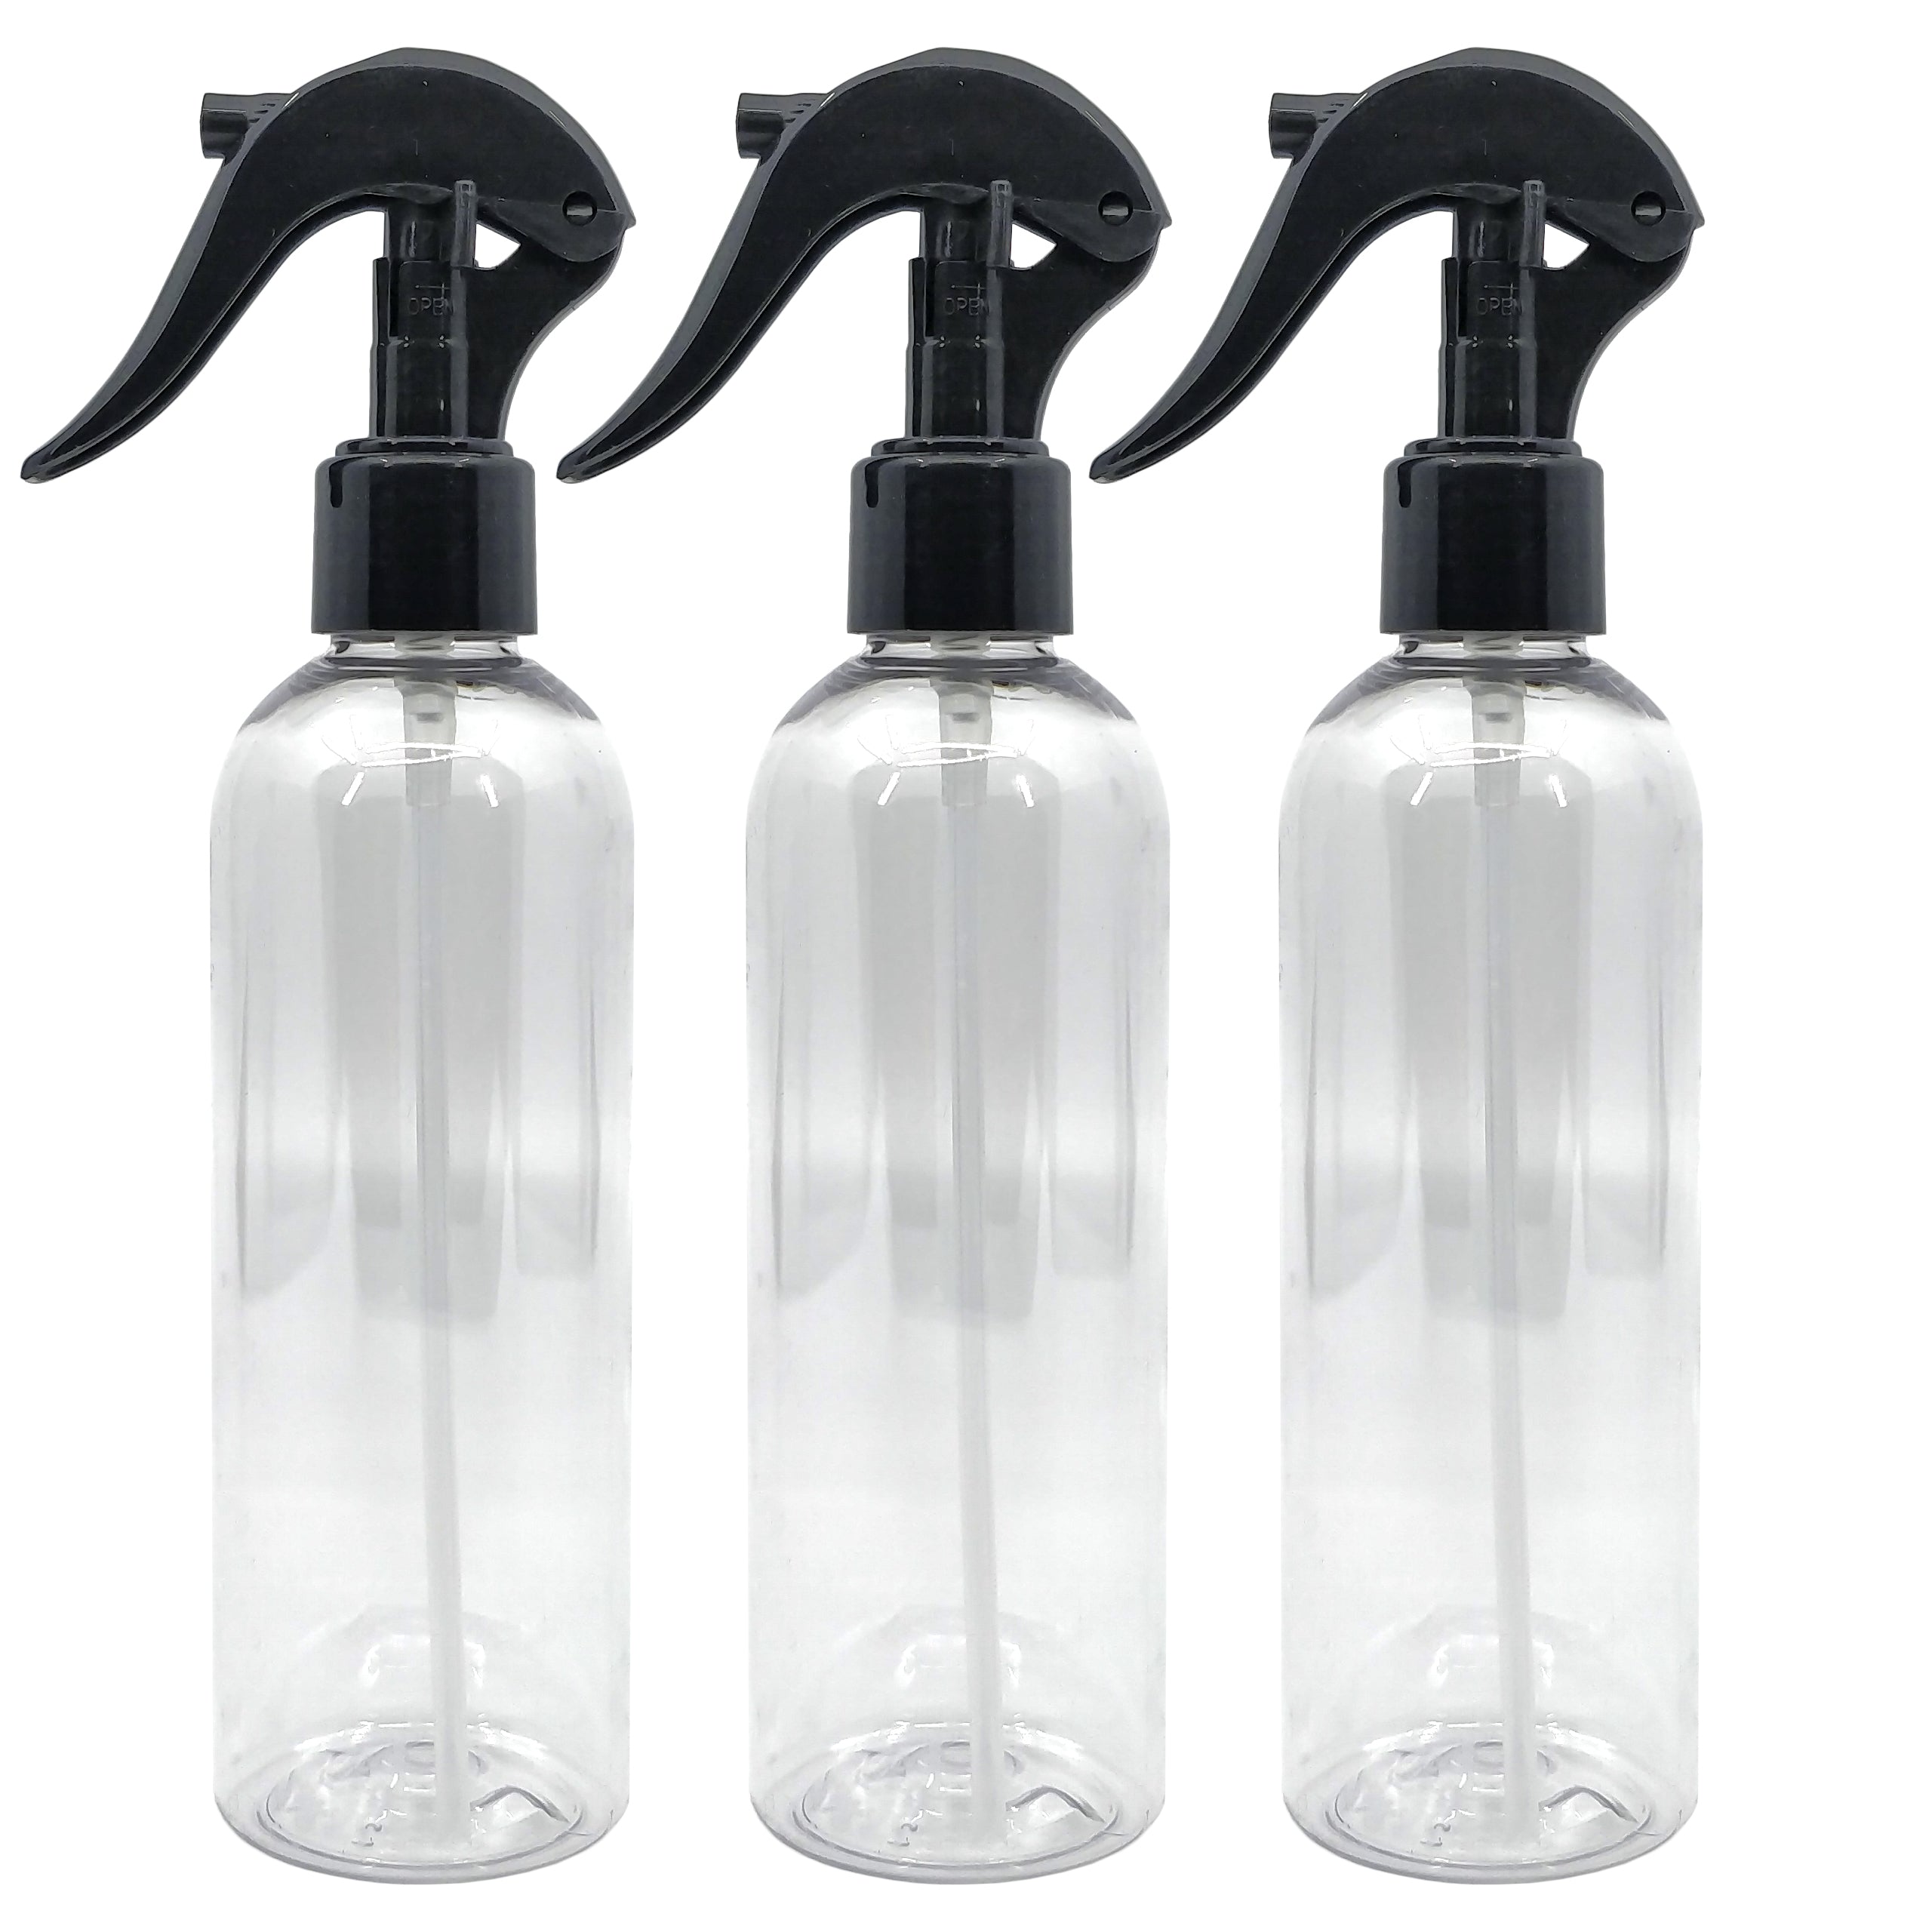 BiOHY spray bottle (transparent) 250ml, pump spray bottle, pressure spray bottle, pressure sprayer